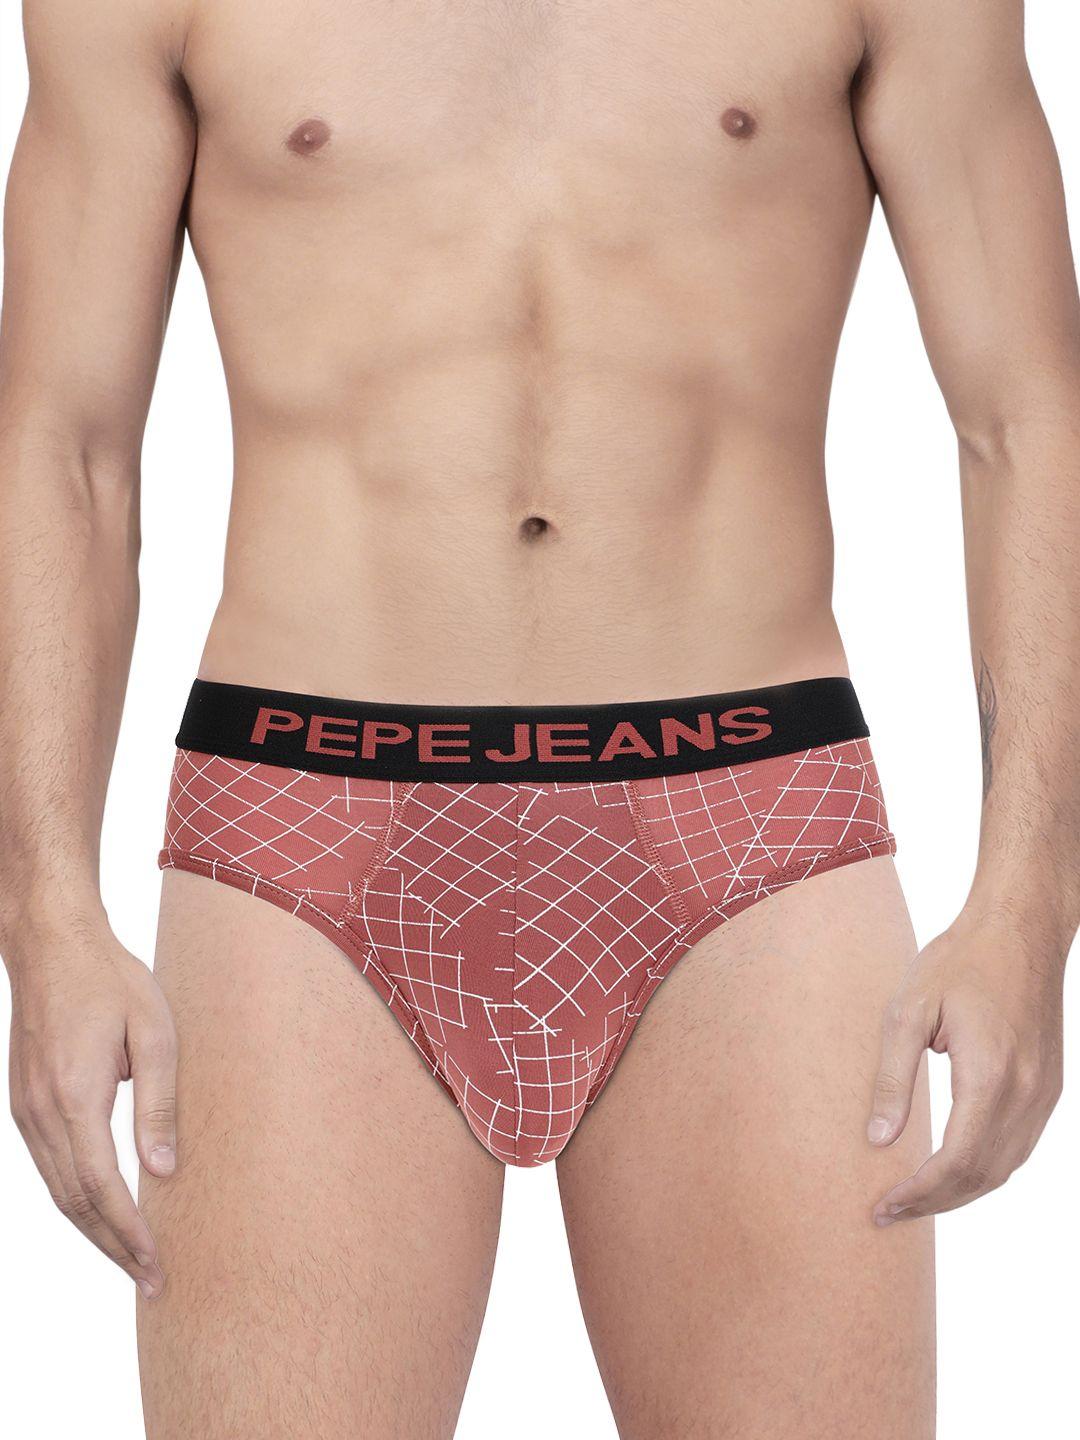 pepe-jeans-men-rust-red-printed-briefs-8904311305521